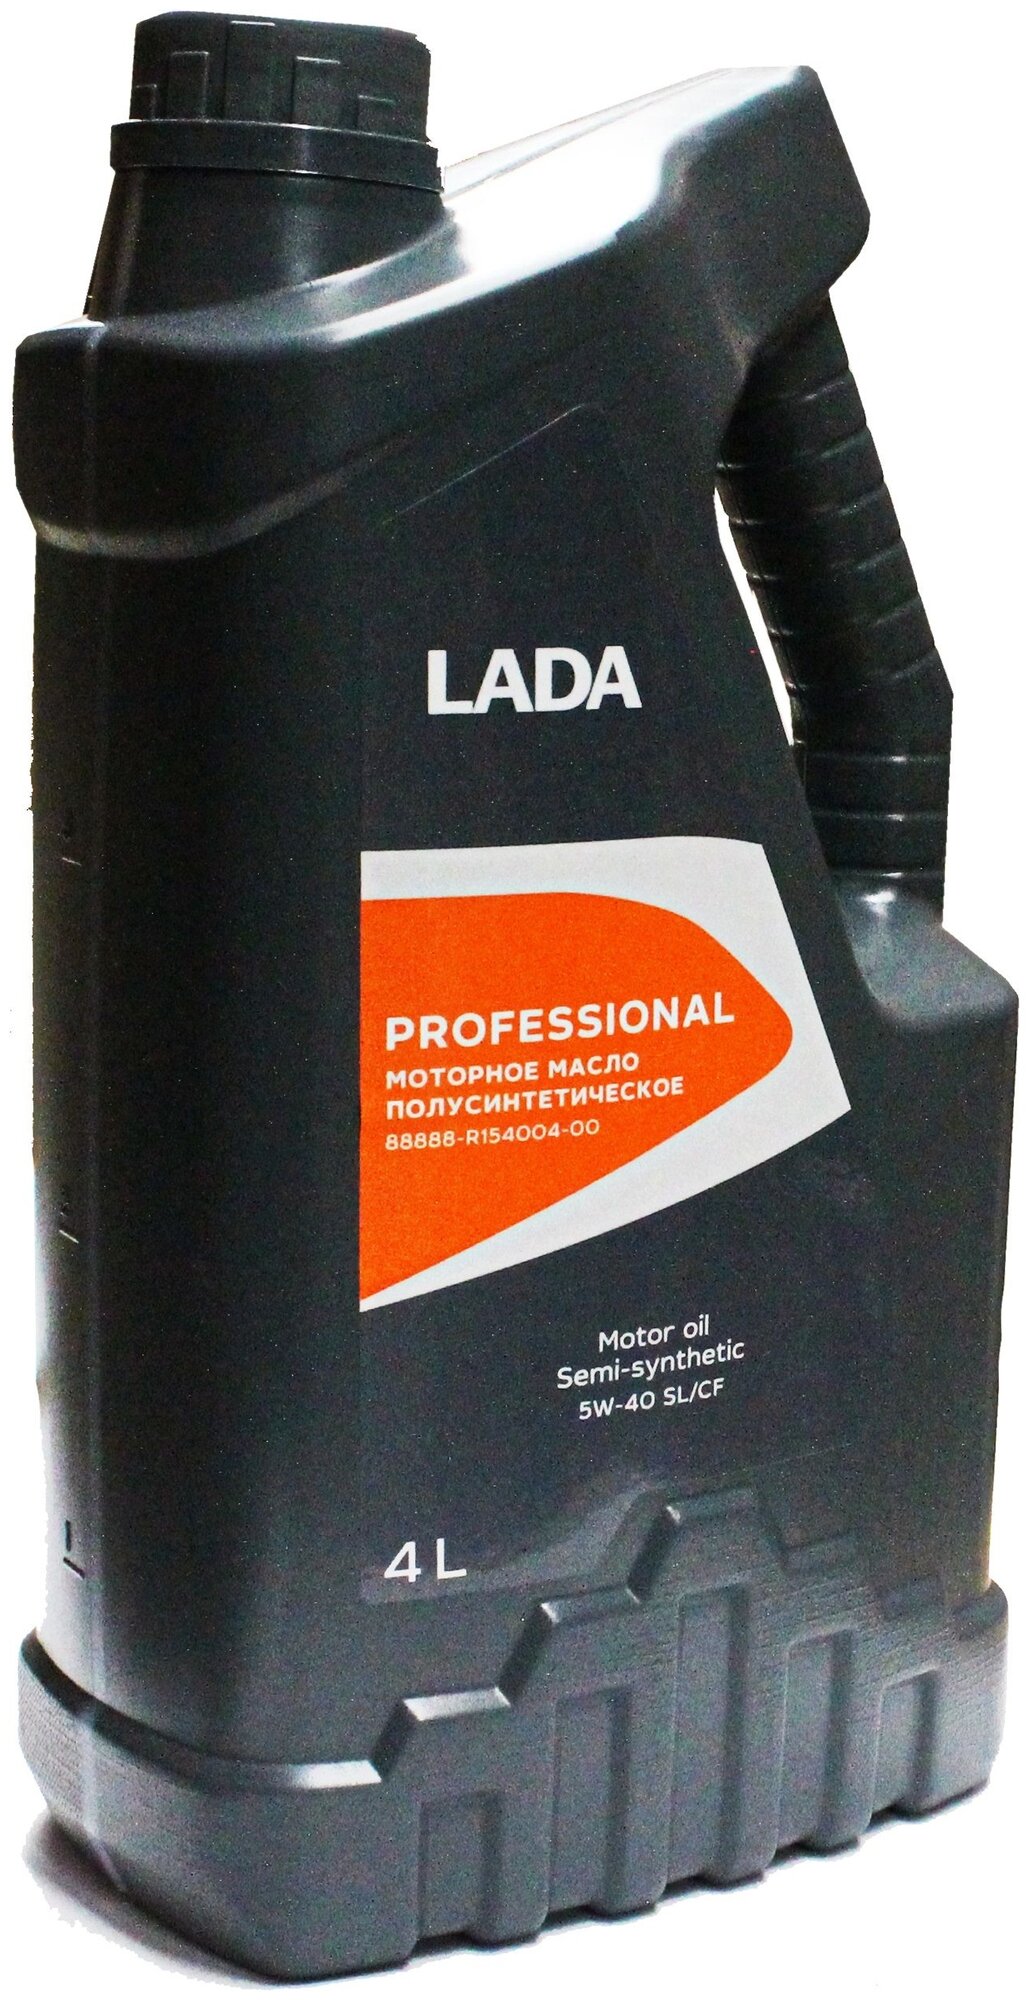 Масло lada professional 5w40 мот п/с (4л) роснефть, lada, 88888r15400400